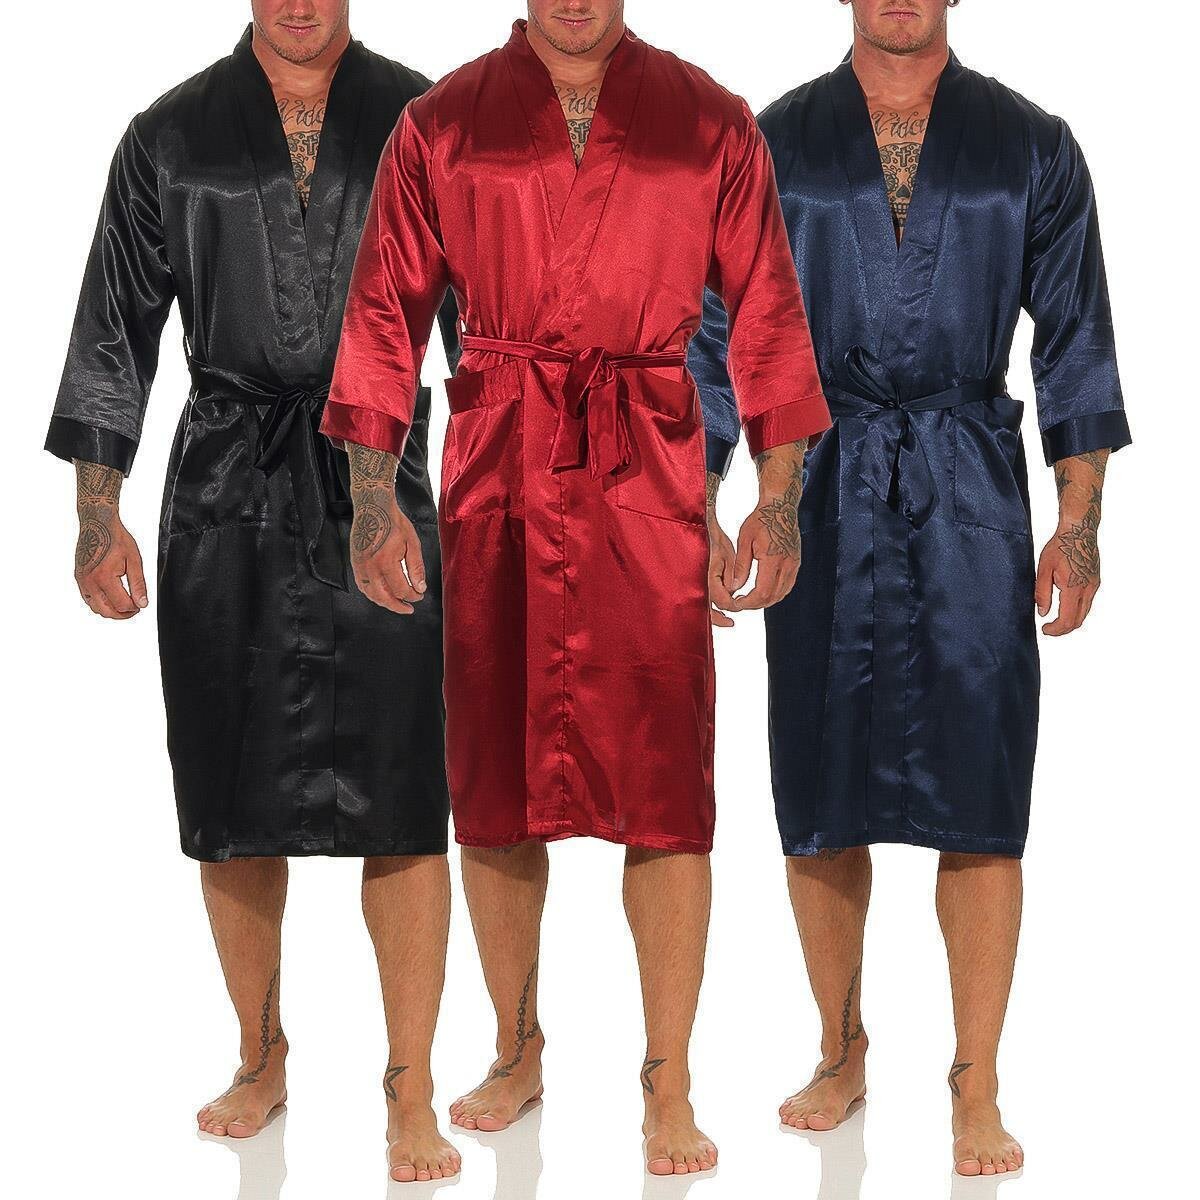 Herren Schwarz € Bademantel Morgenmantel Kimono Bathrobe Glanz Rot, 19,99 Robe